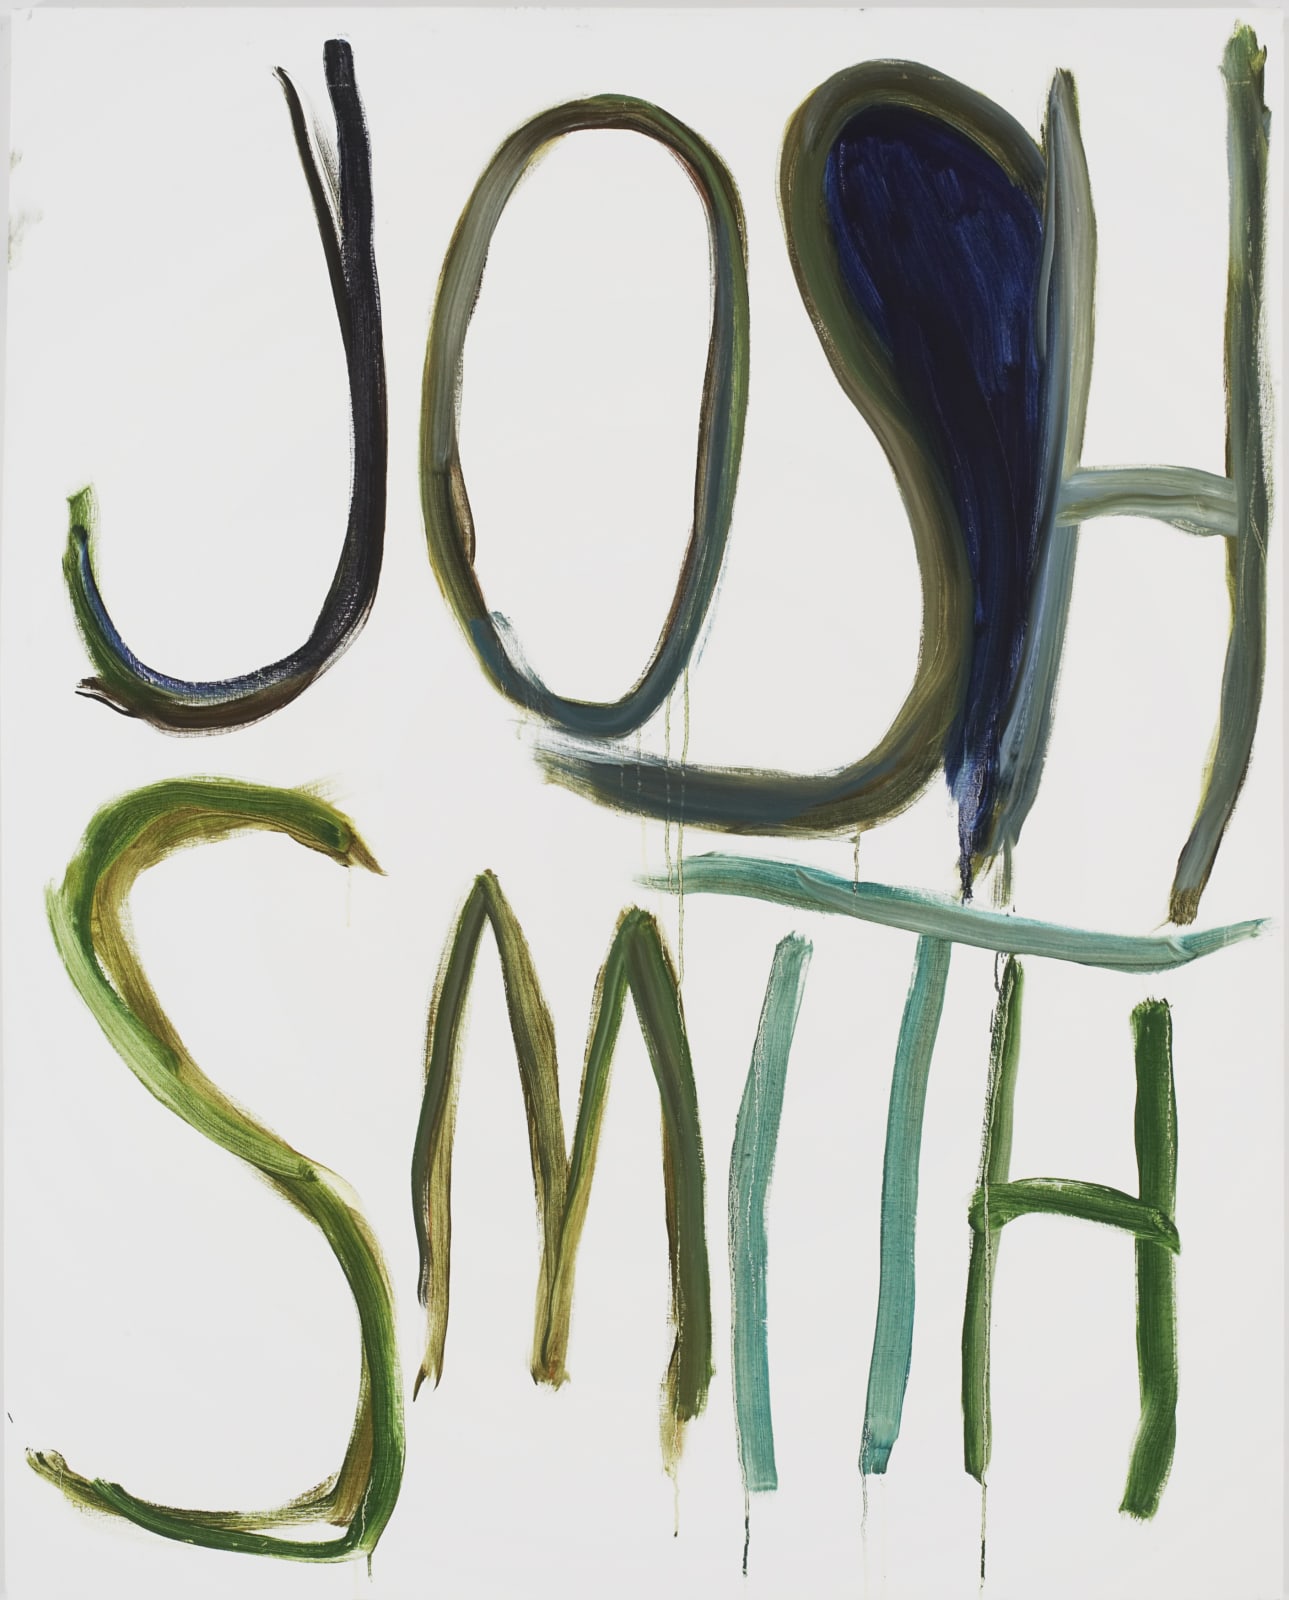 New York – Josh Smith: “Sculpture” at Luhring Augustine Through